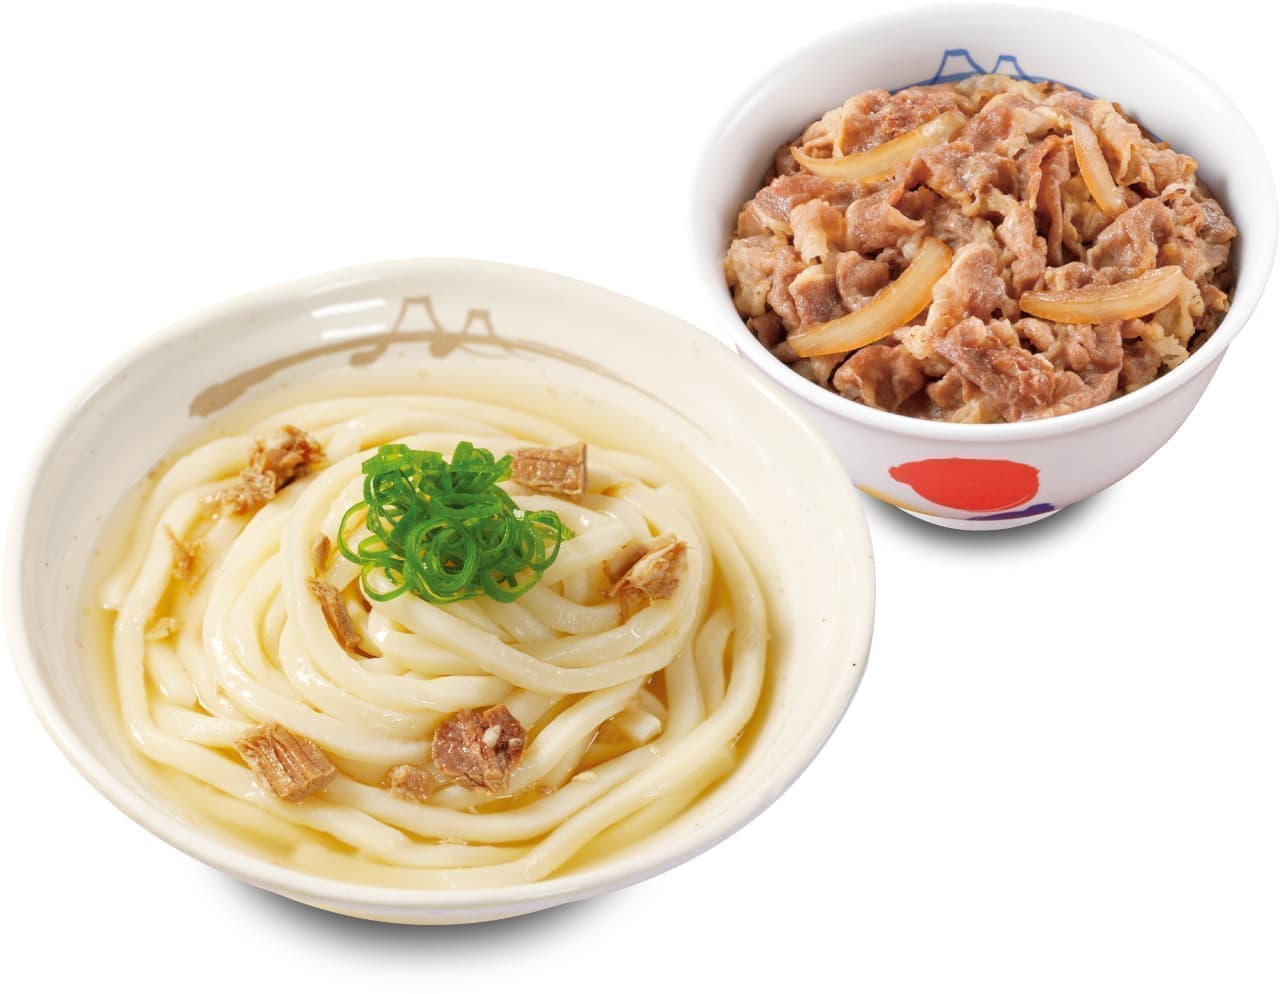 Matsuya "Kake Udon Beef Rice with Small portion of Udon" set